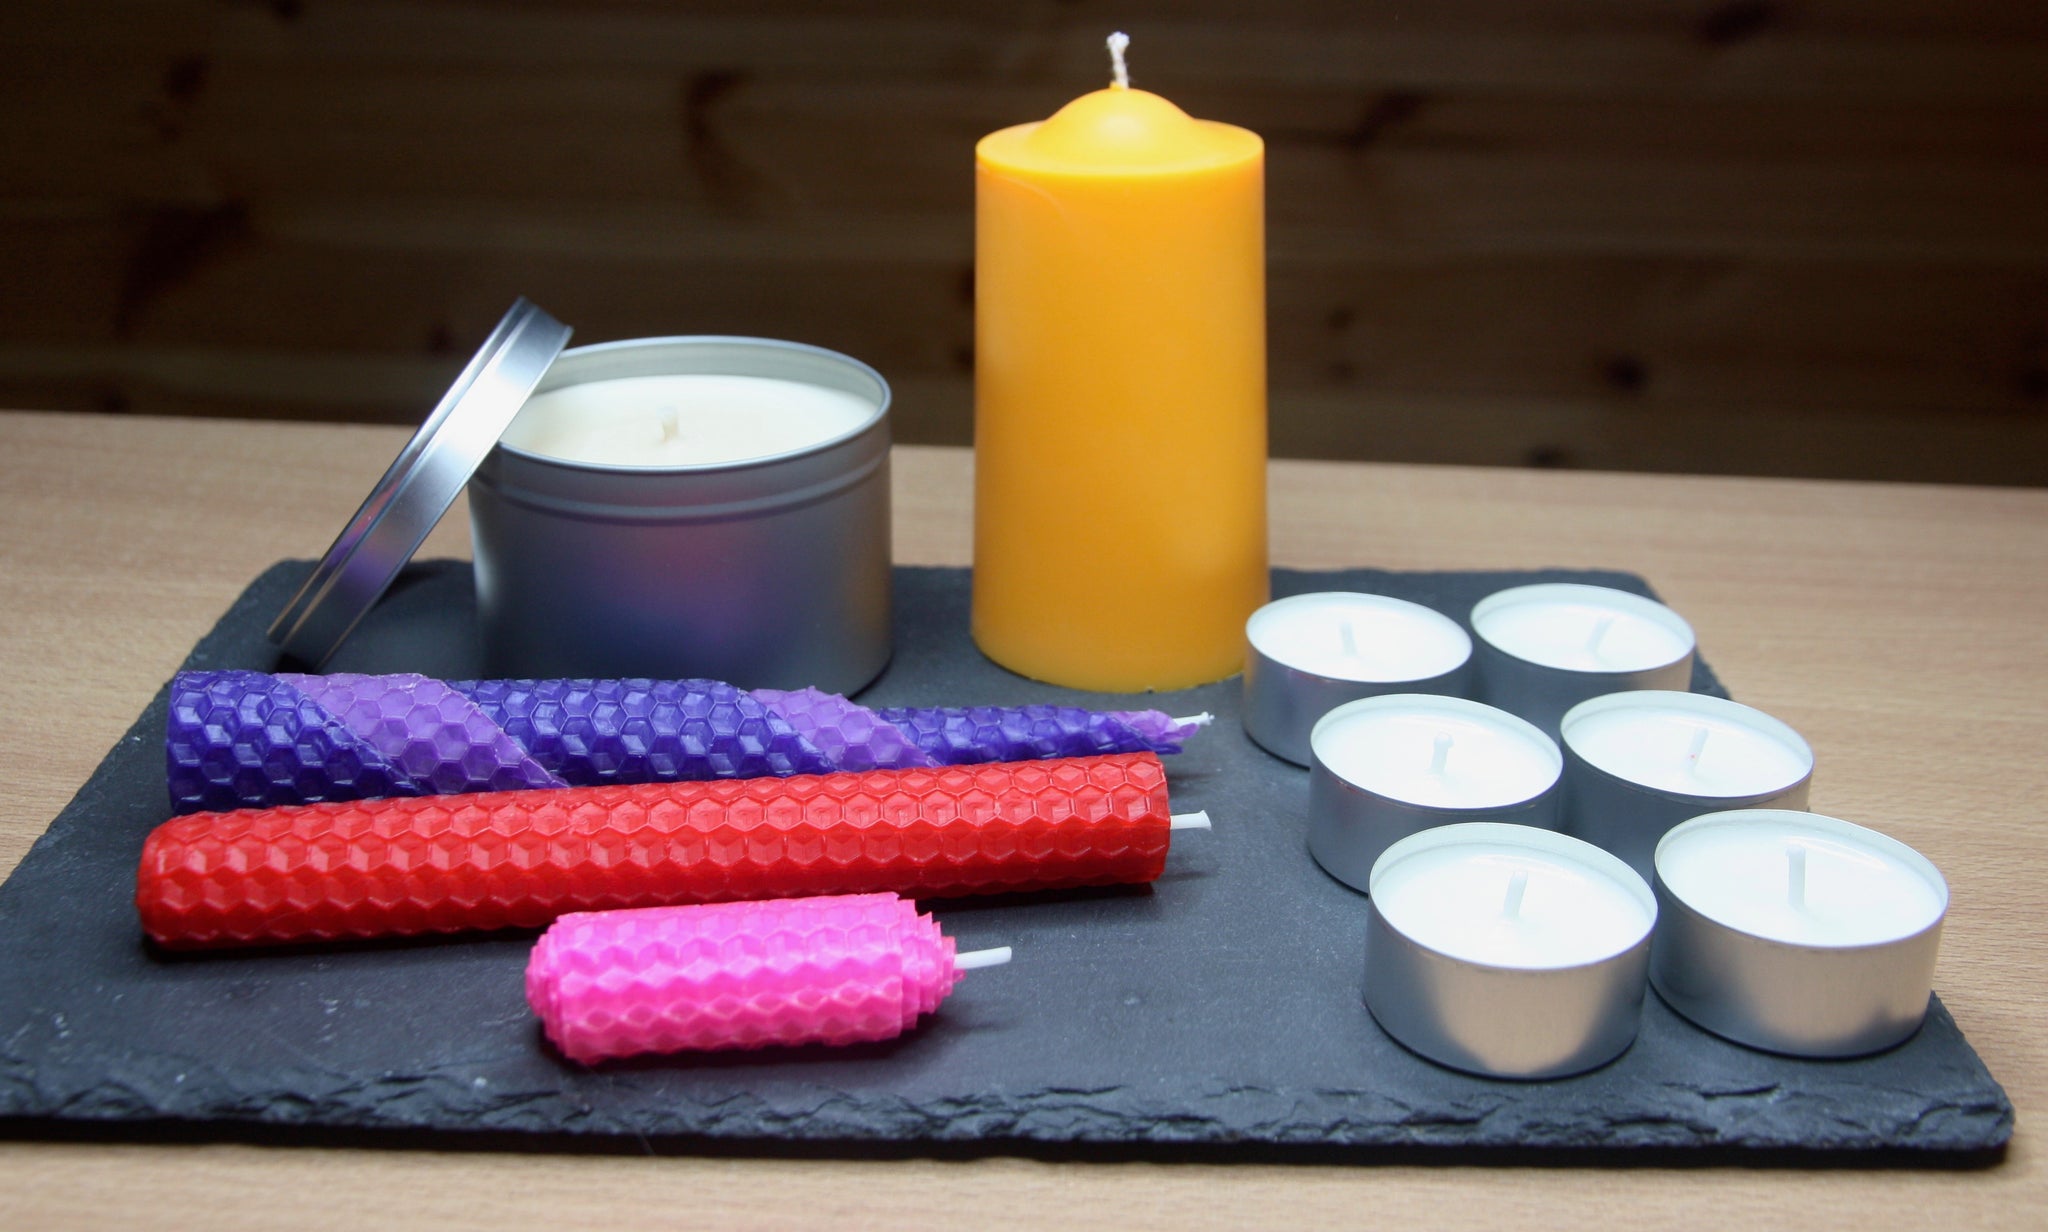 Beginners candle-making kit + online videos + LIVE online workshop